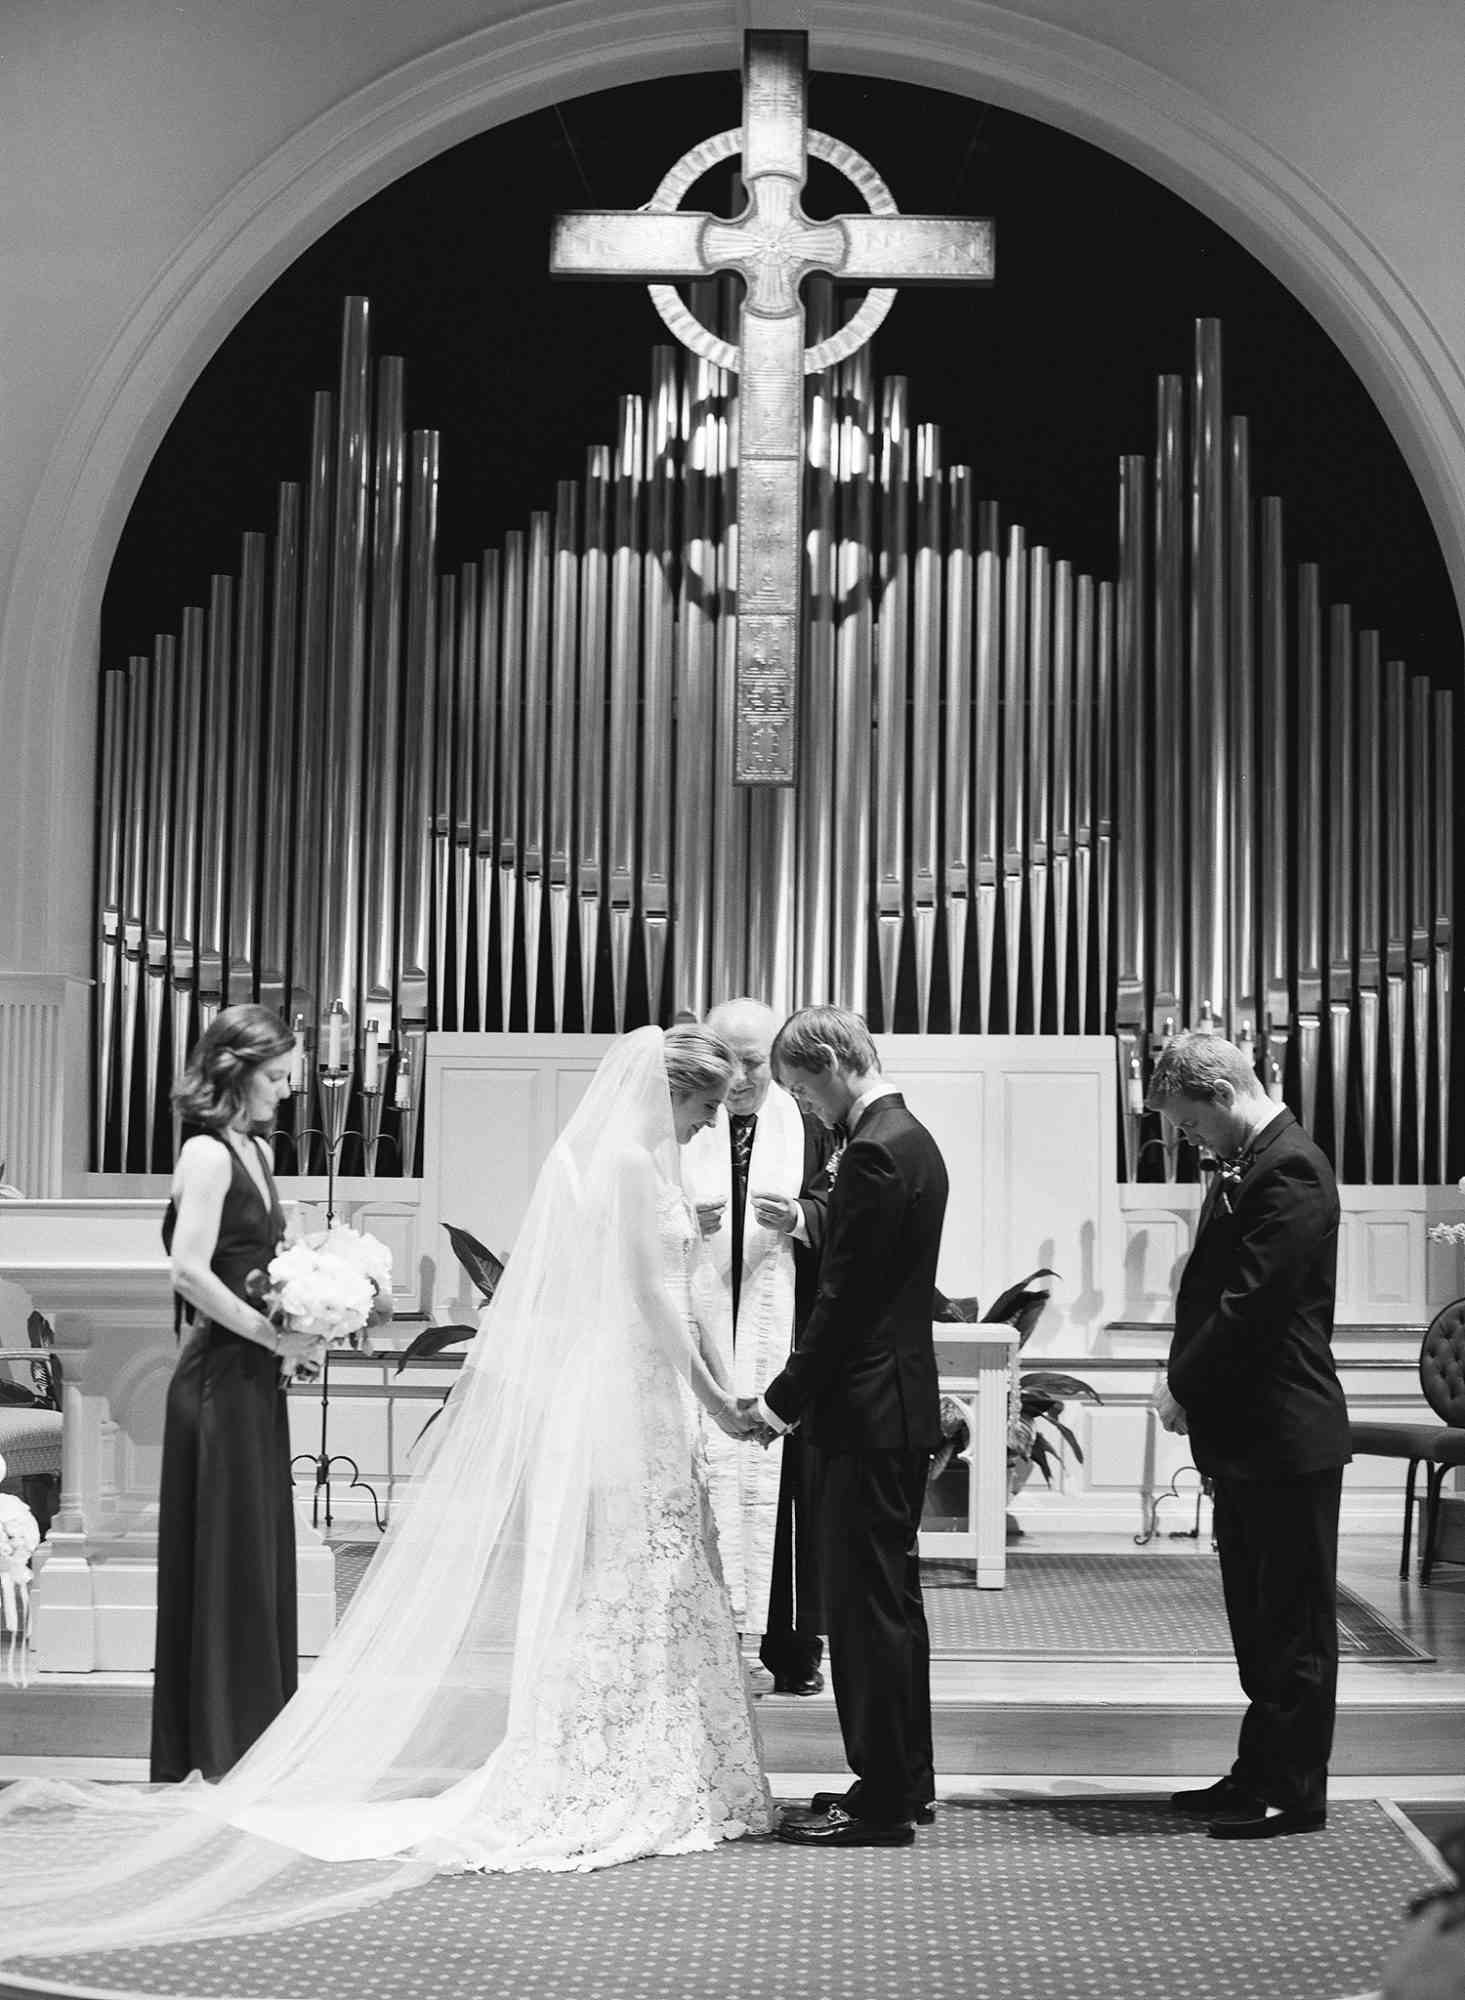 chelsea conor wedding ceremony in church